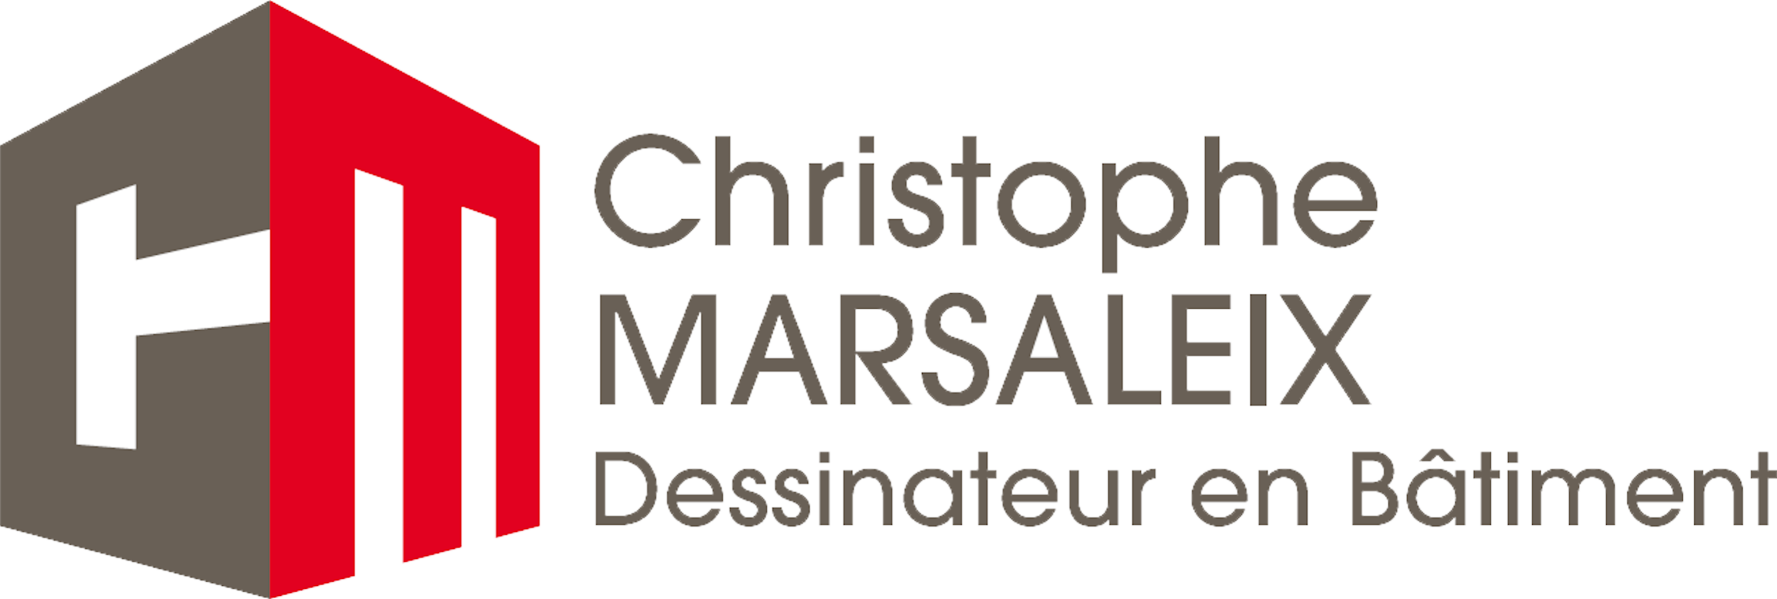 Christophe Marsaleix - Nos vidéos